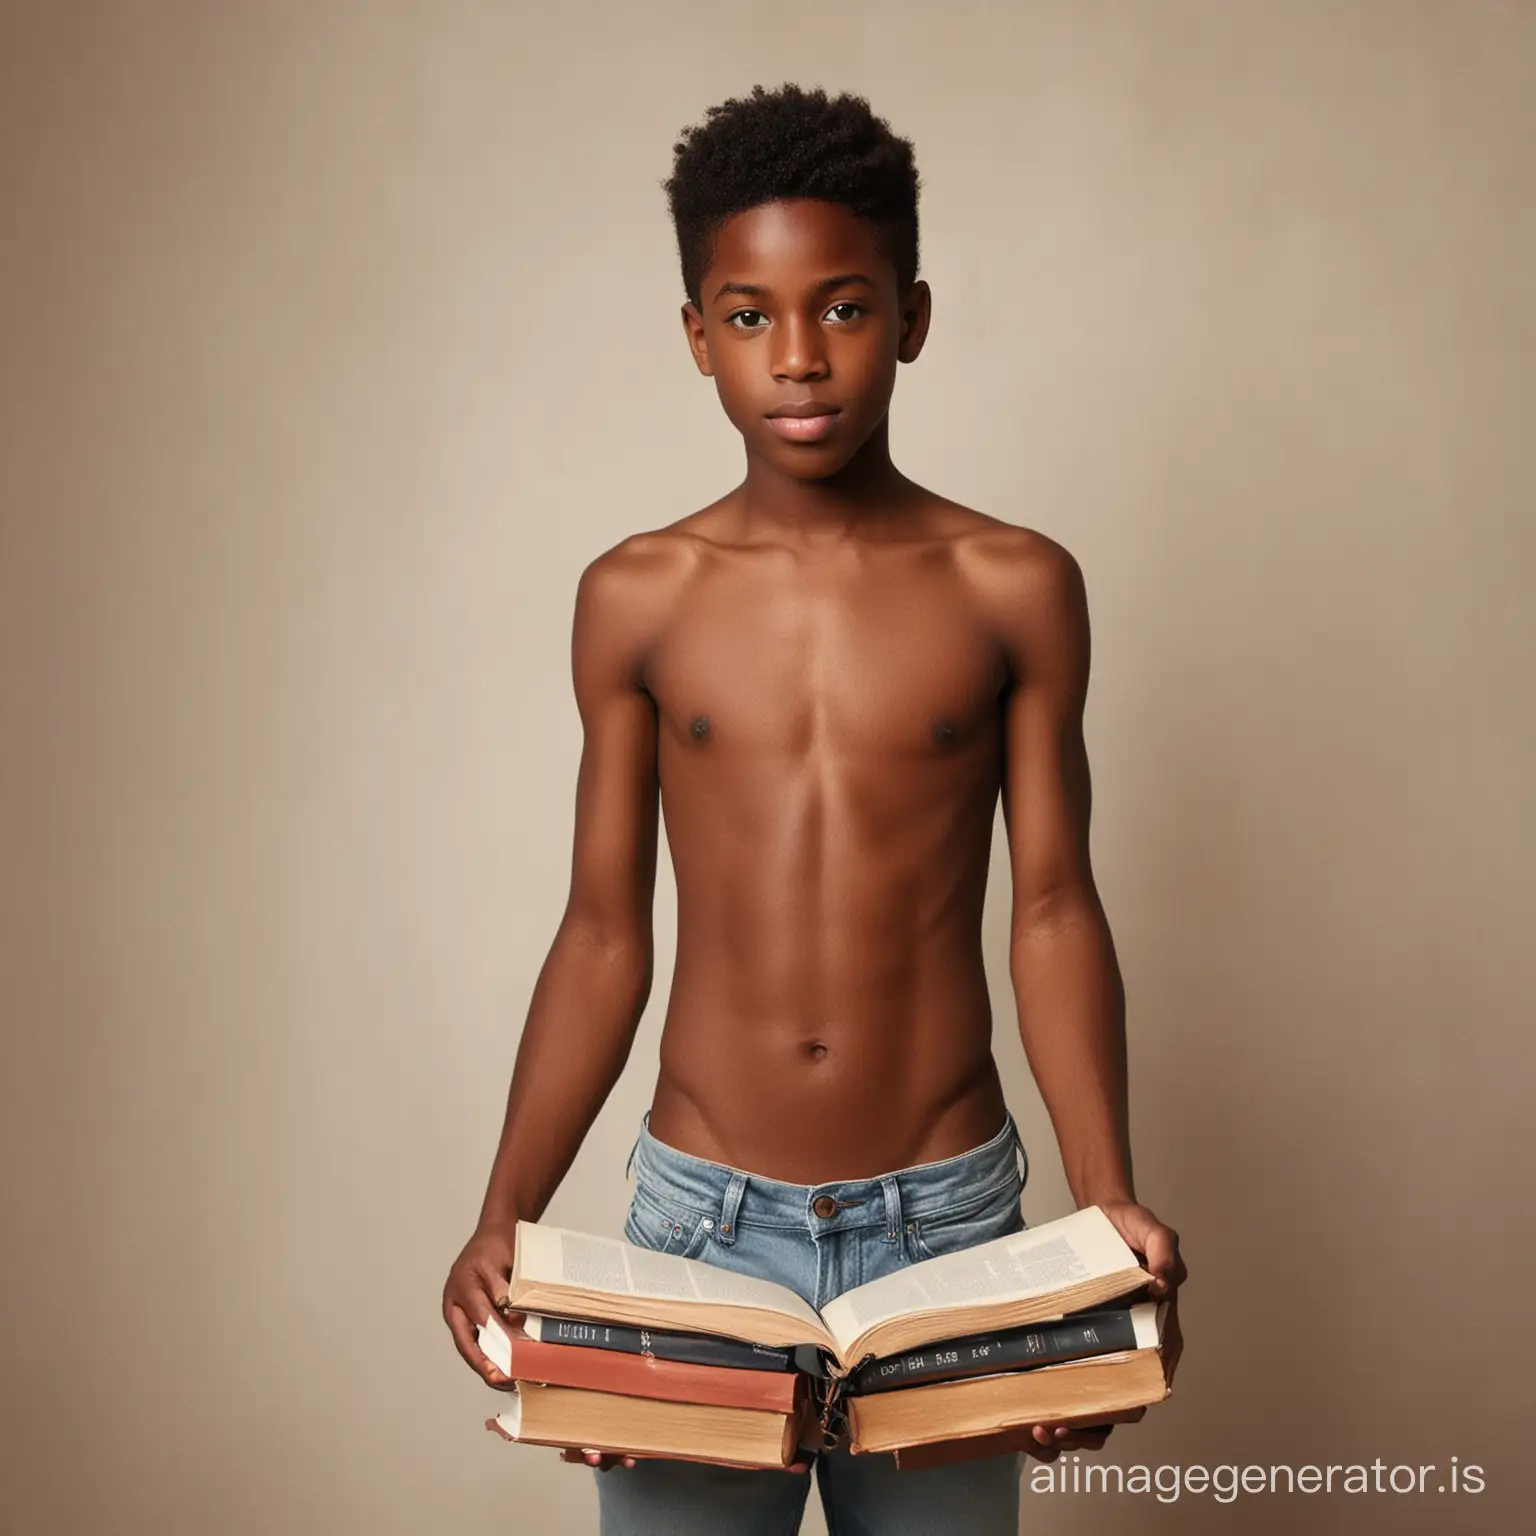 shirtless black boy with books